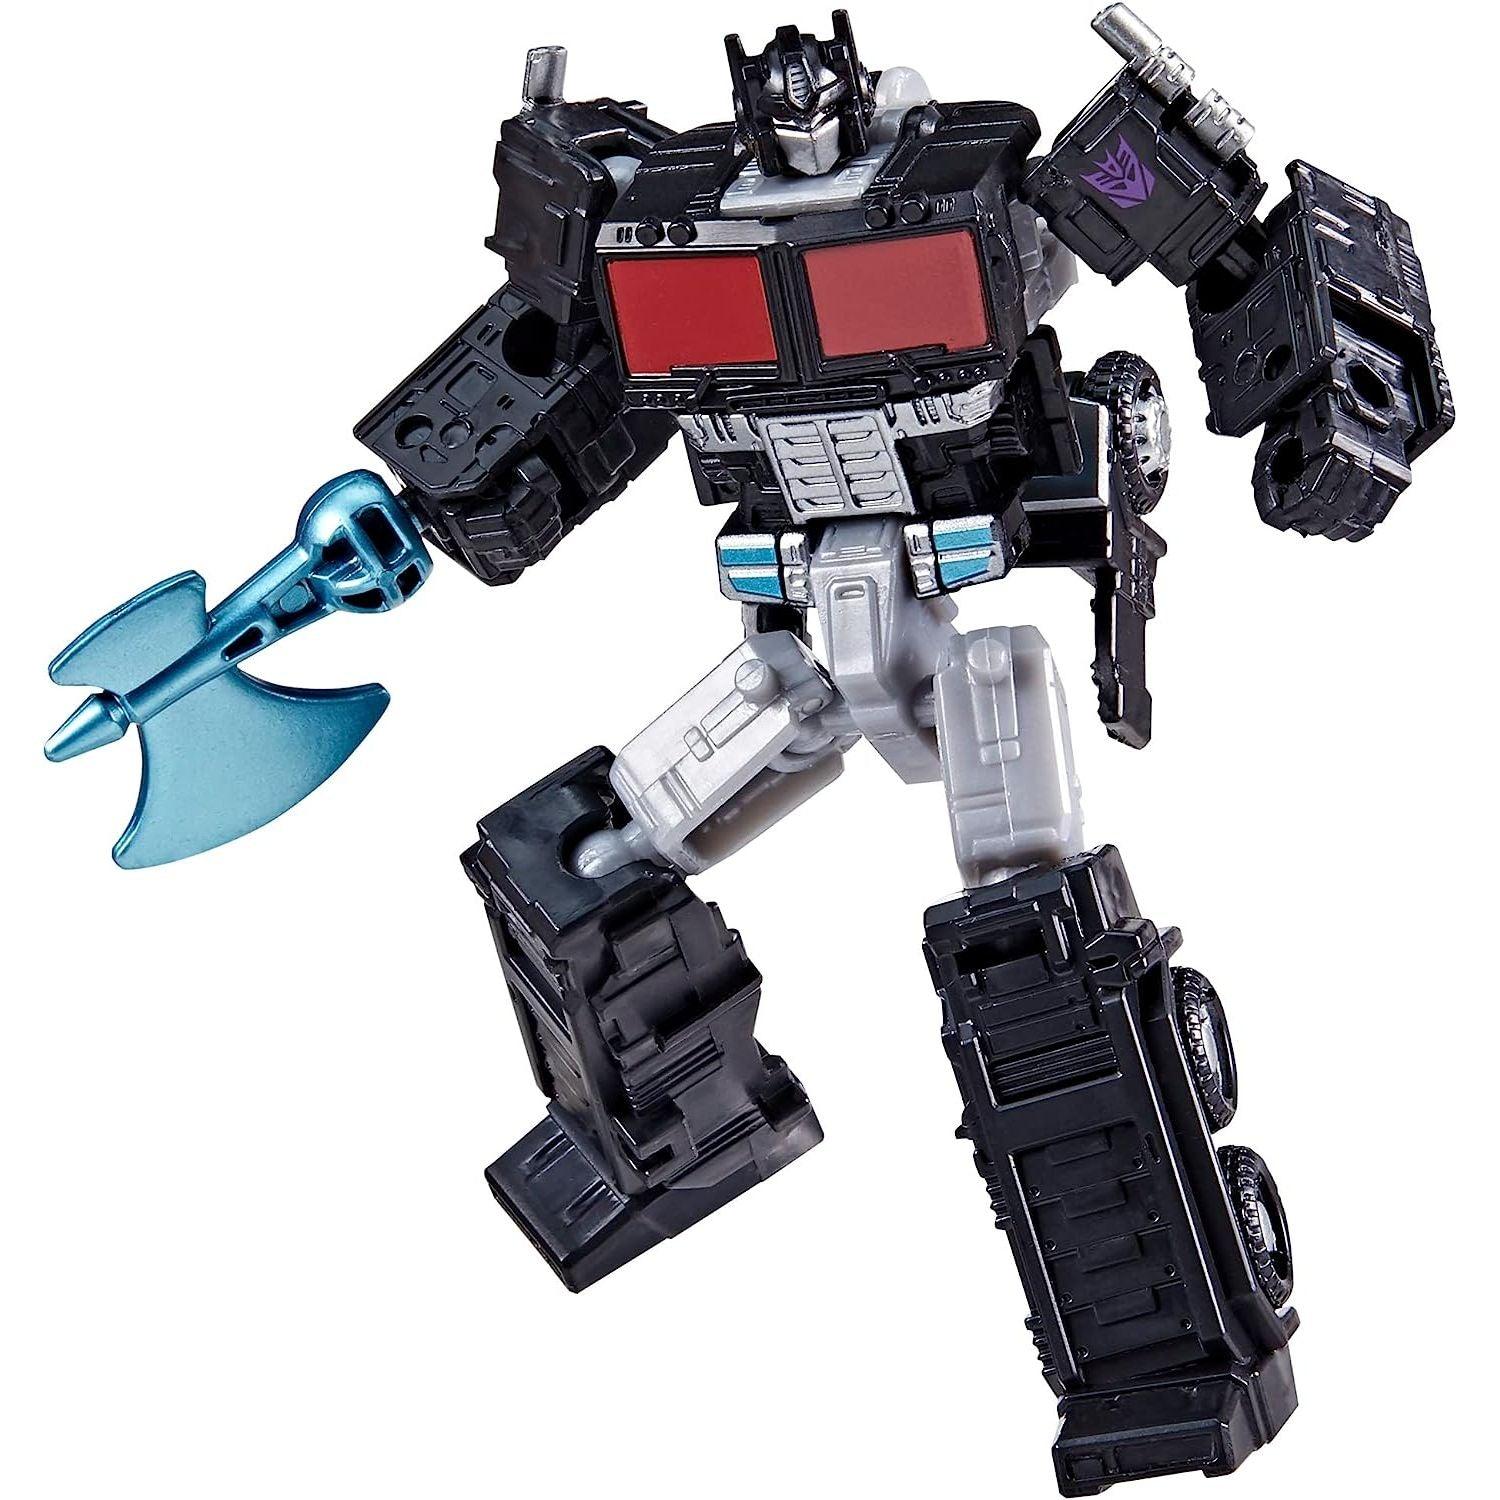 Transformers Toys Legacy Evolution Core Nemesis Prime Toy, 3.5-inch, Action Figure